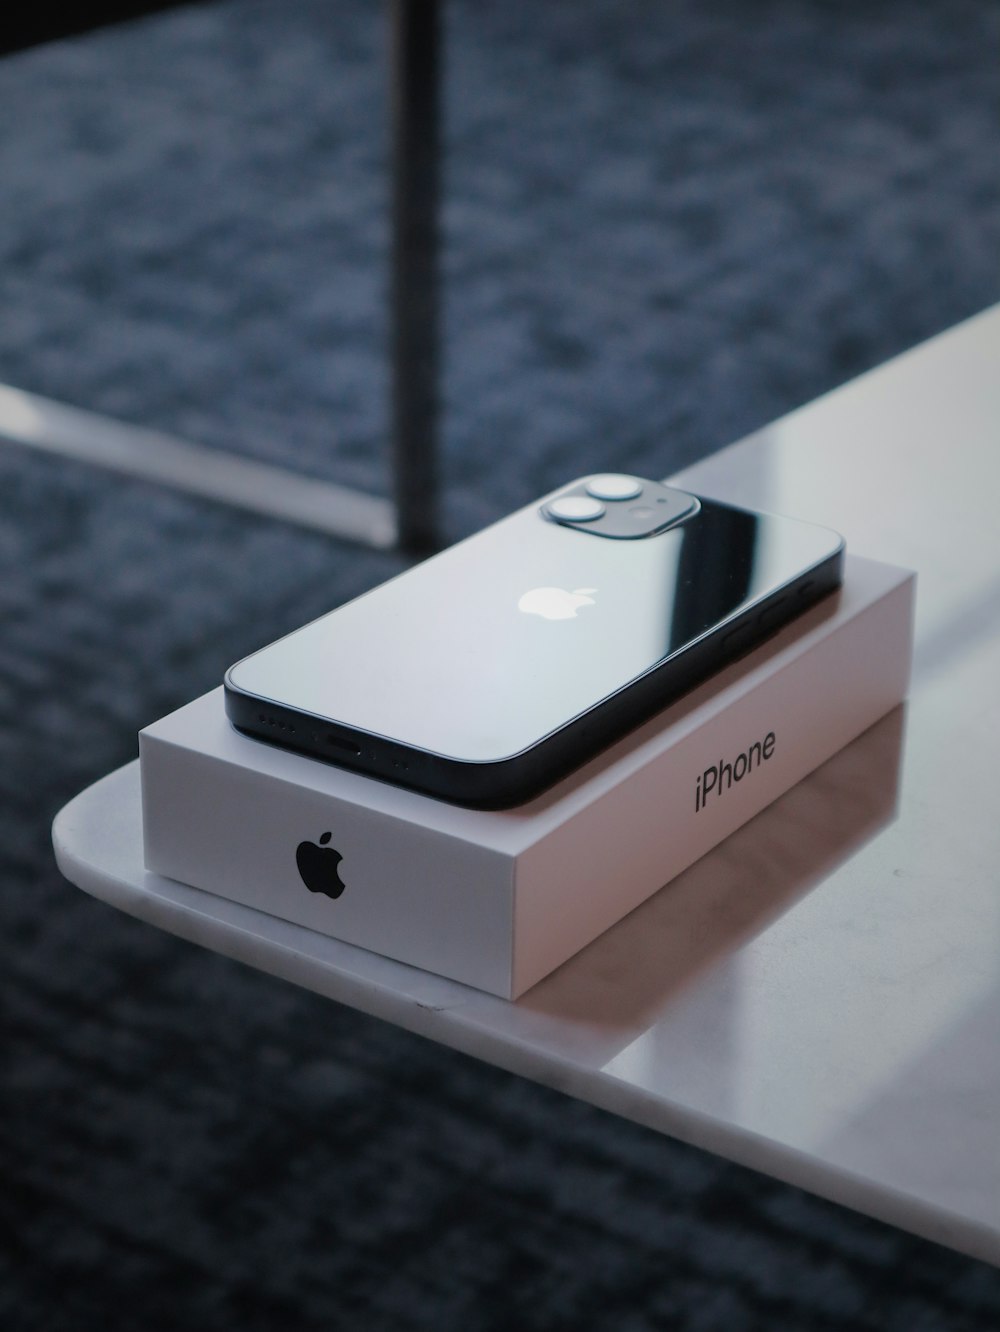 Silber iPhone 6S mit Box